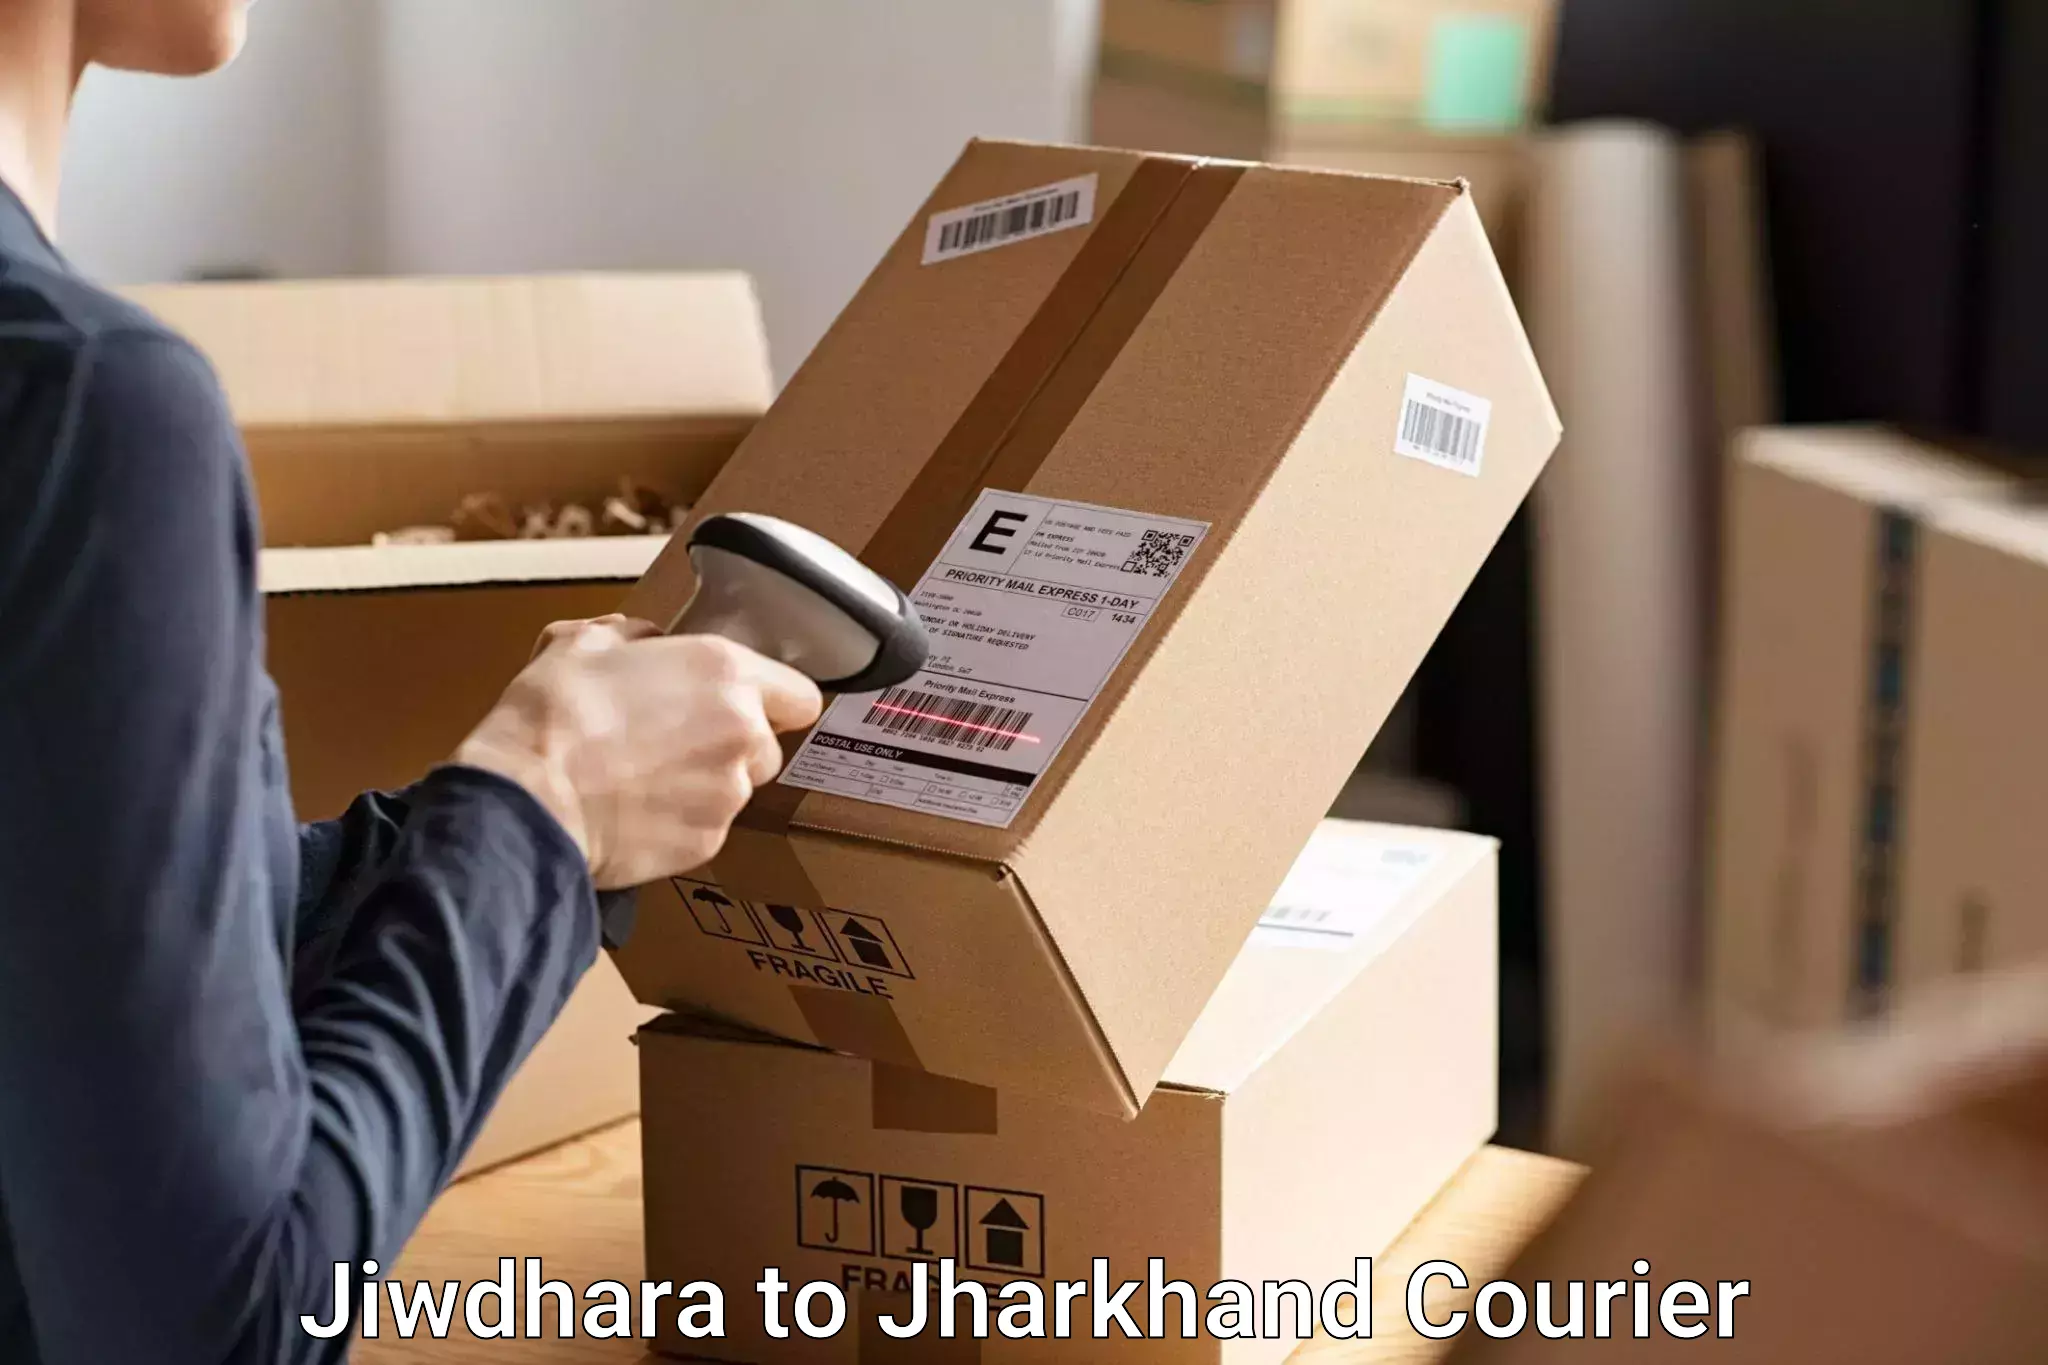 Luggage shipment tracking Jiwdhara to Poreyahat